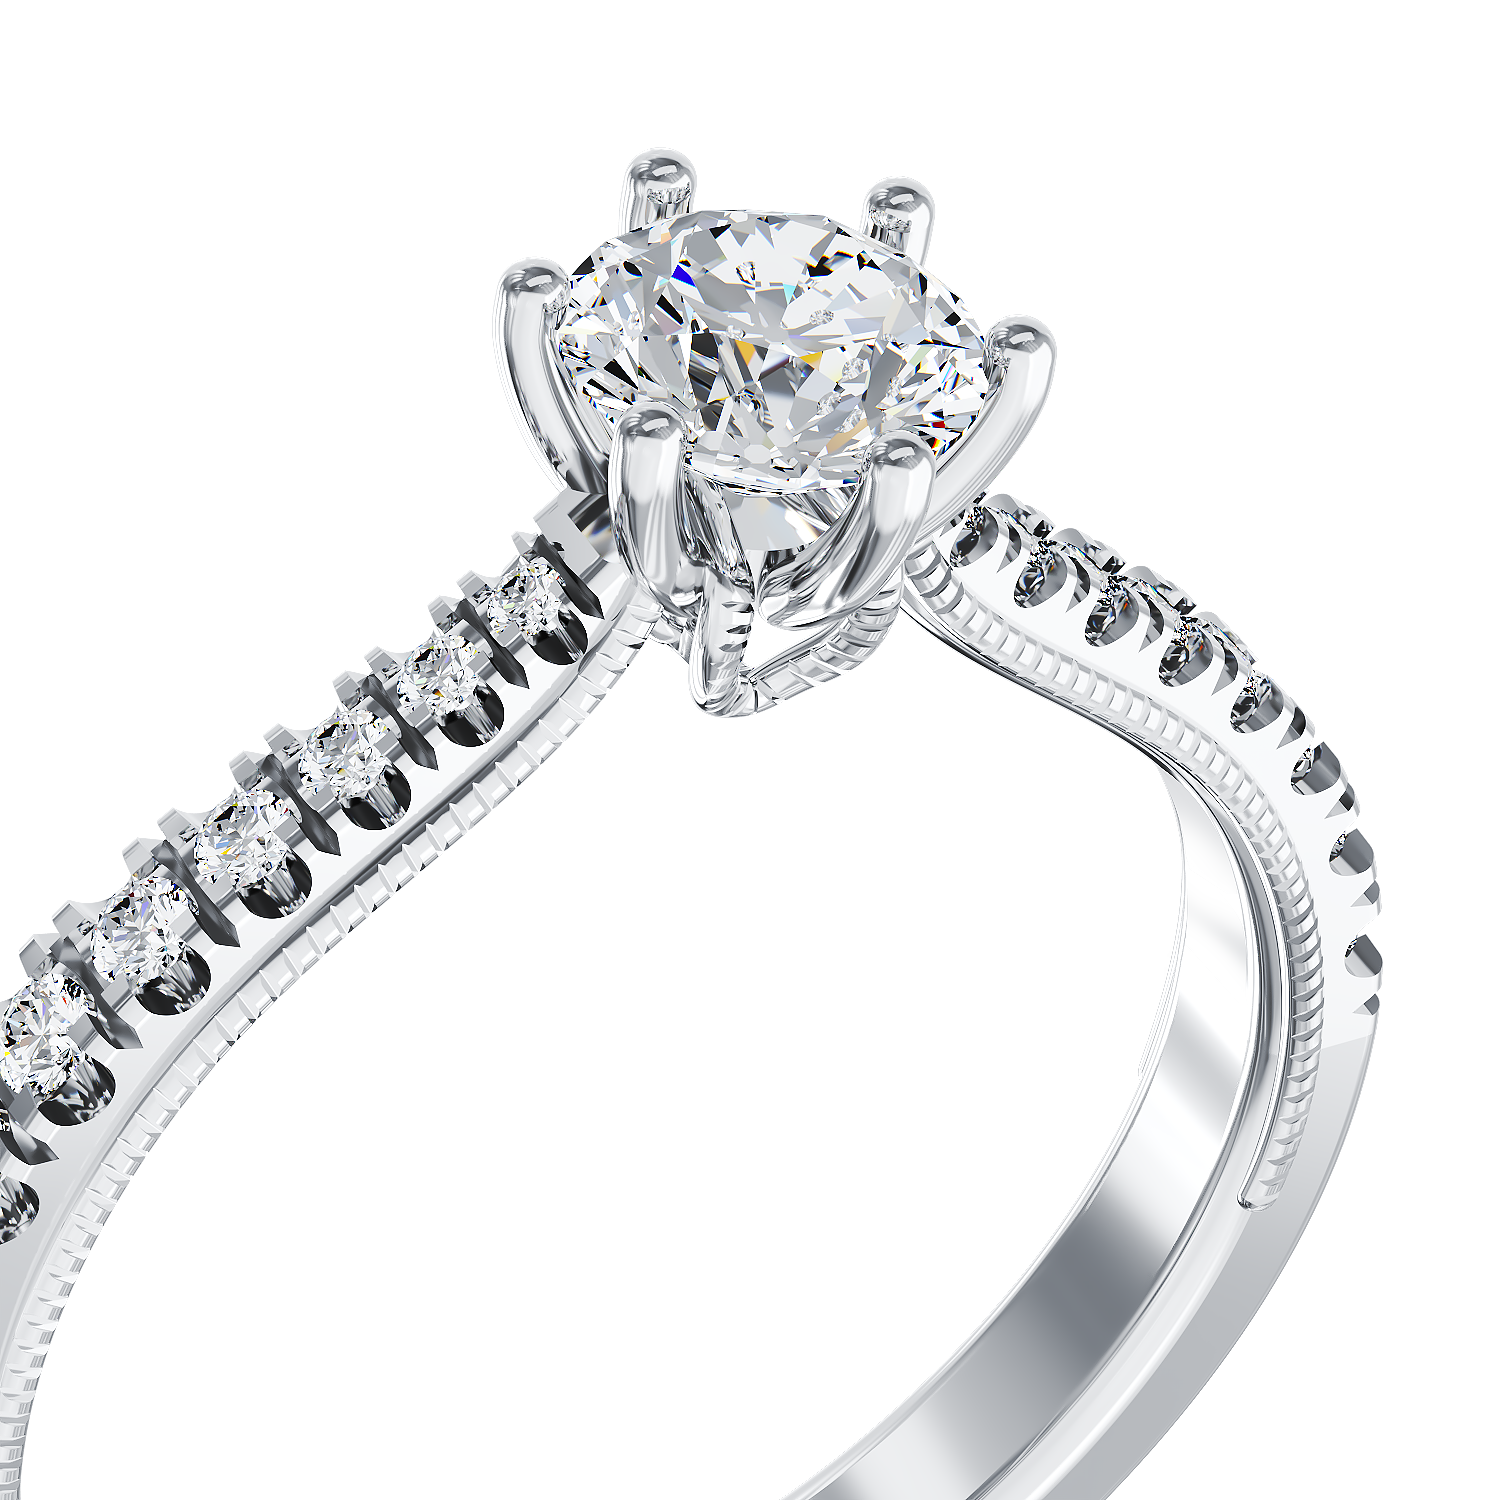 Poze Inel de logodna din aur alb de 18K cu diamant de 0.16ct si diamante de 0.18ct